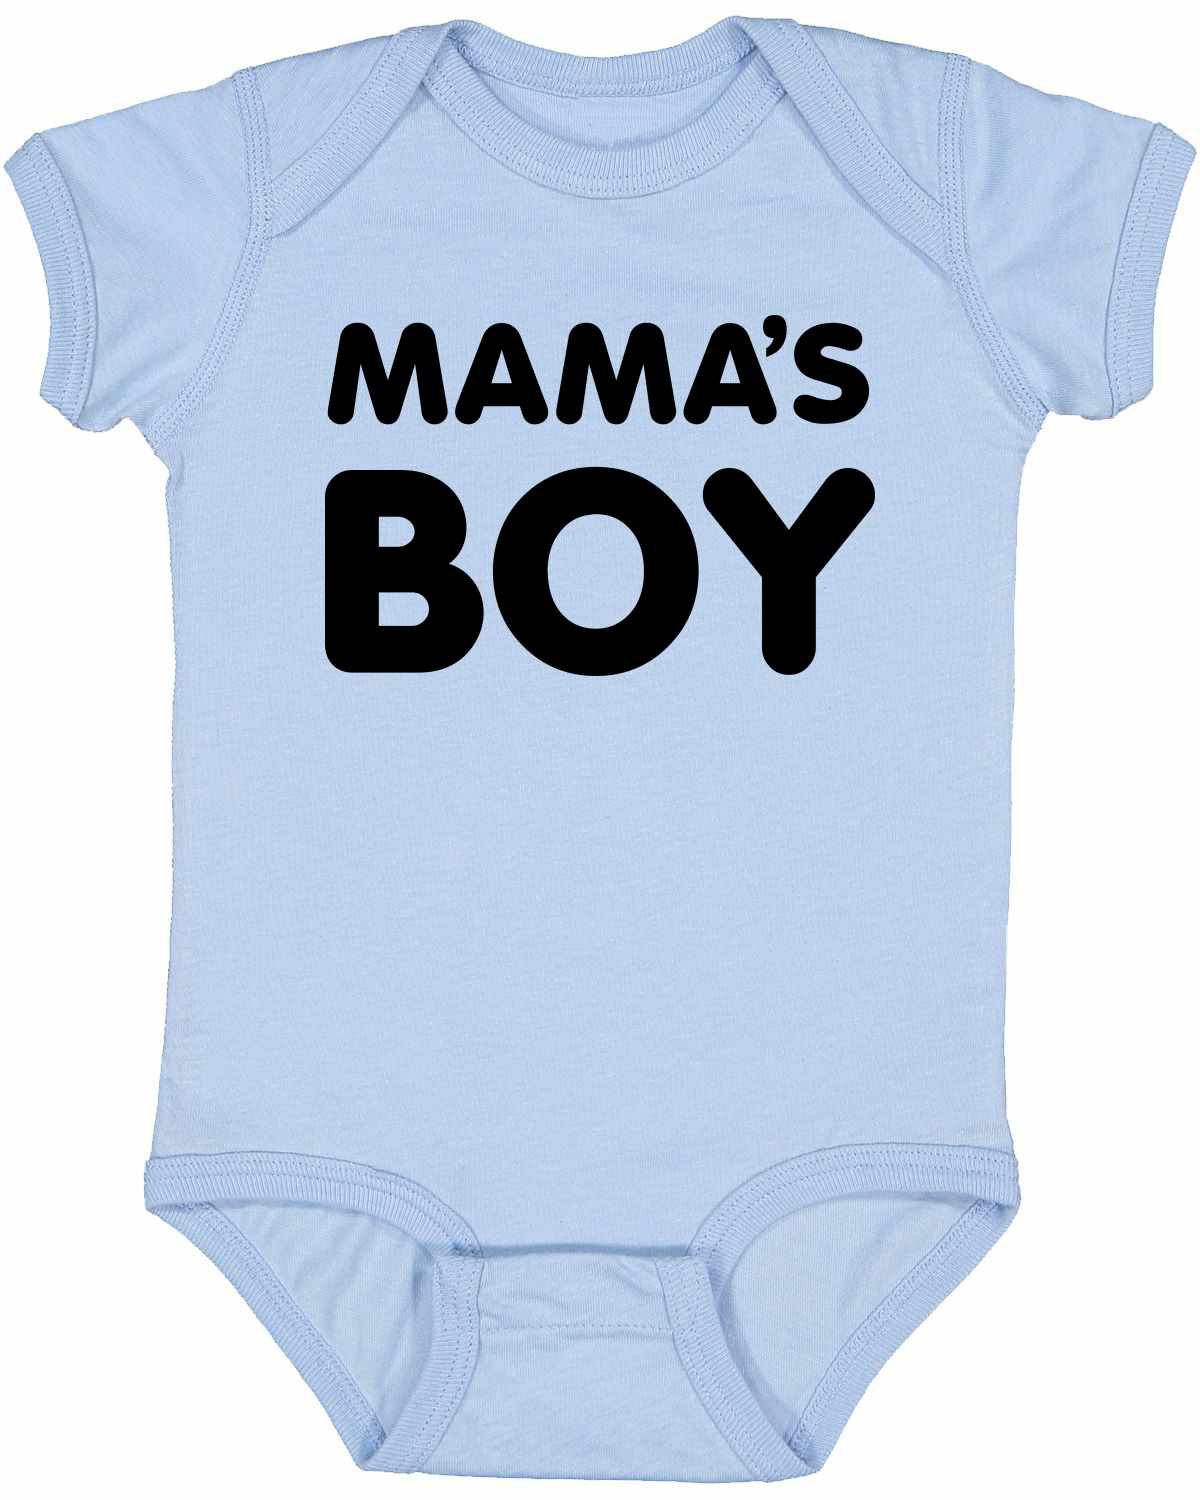 MAMA'S BOY on Infant BodySuit